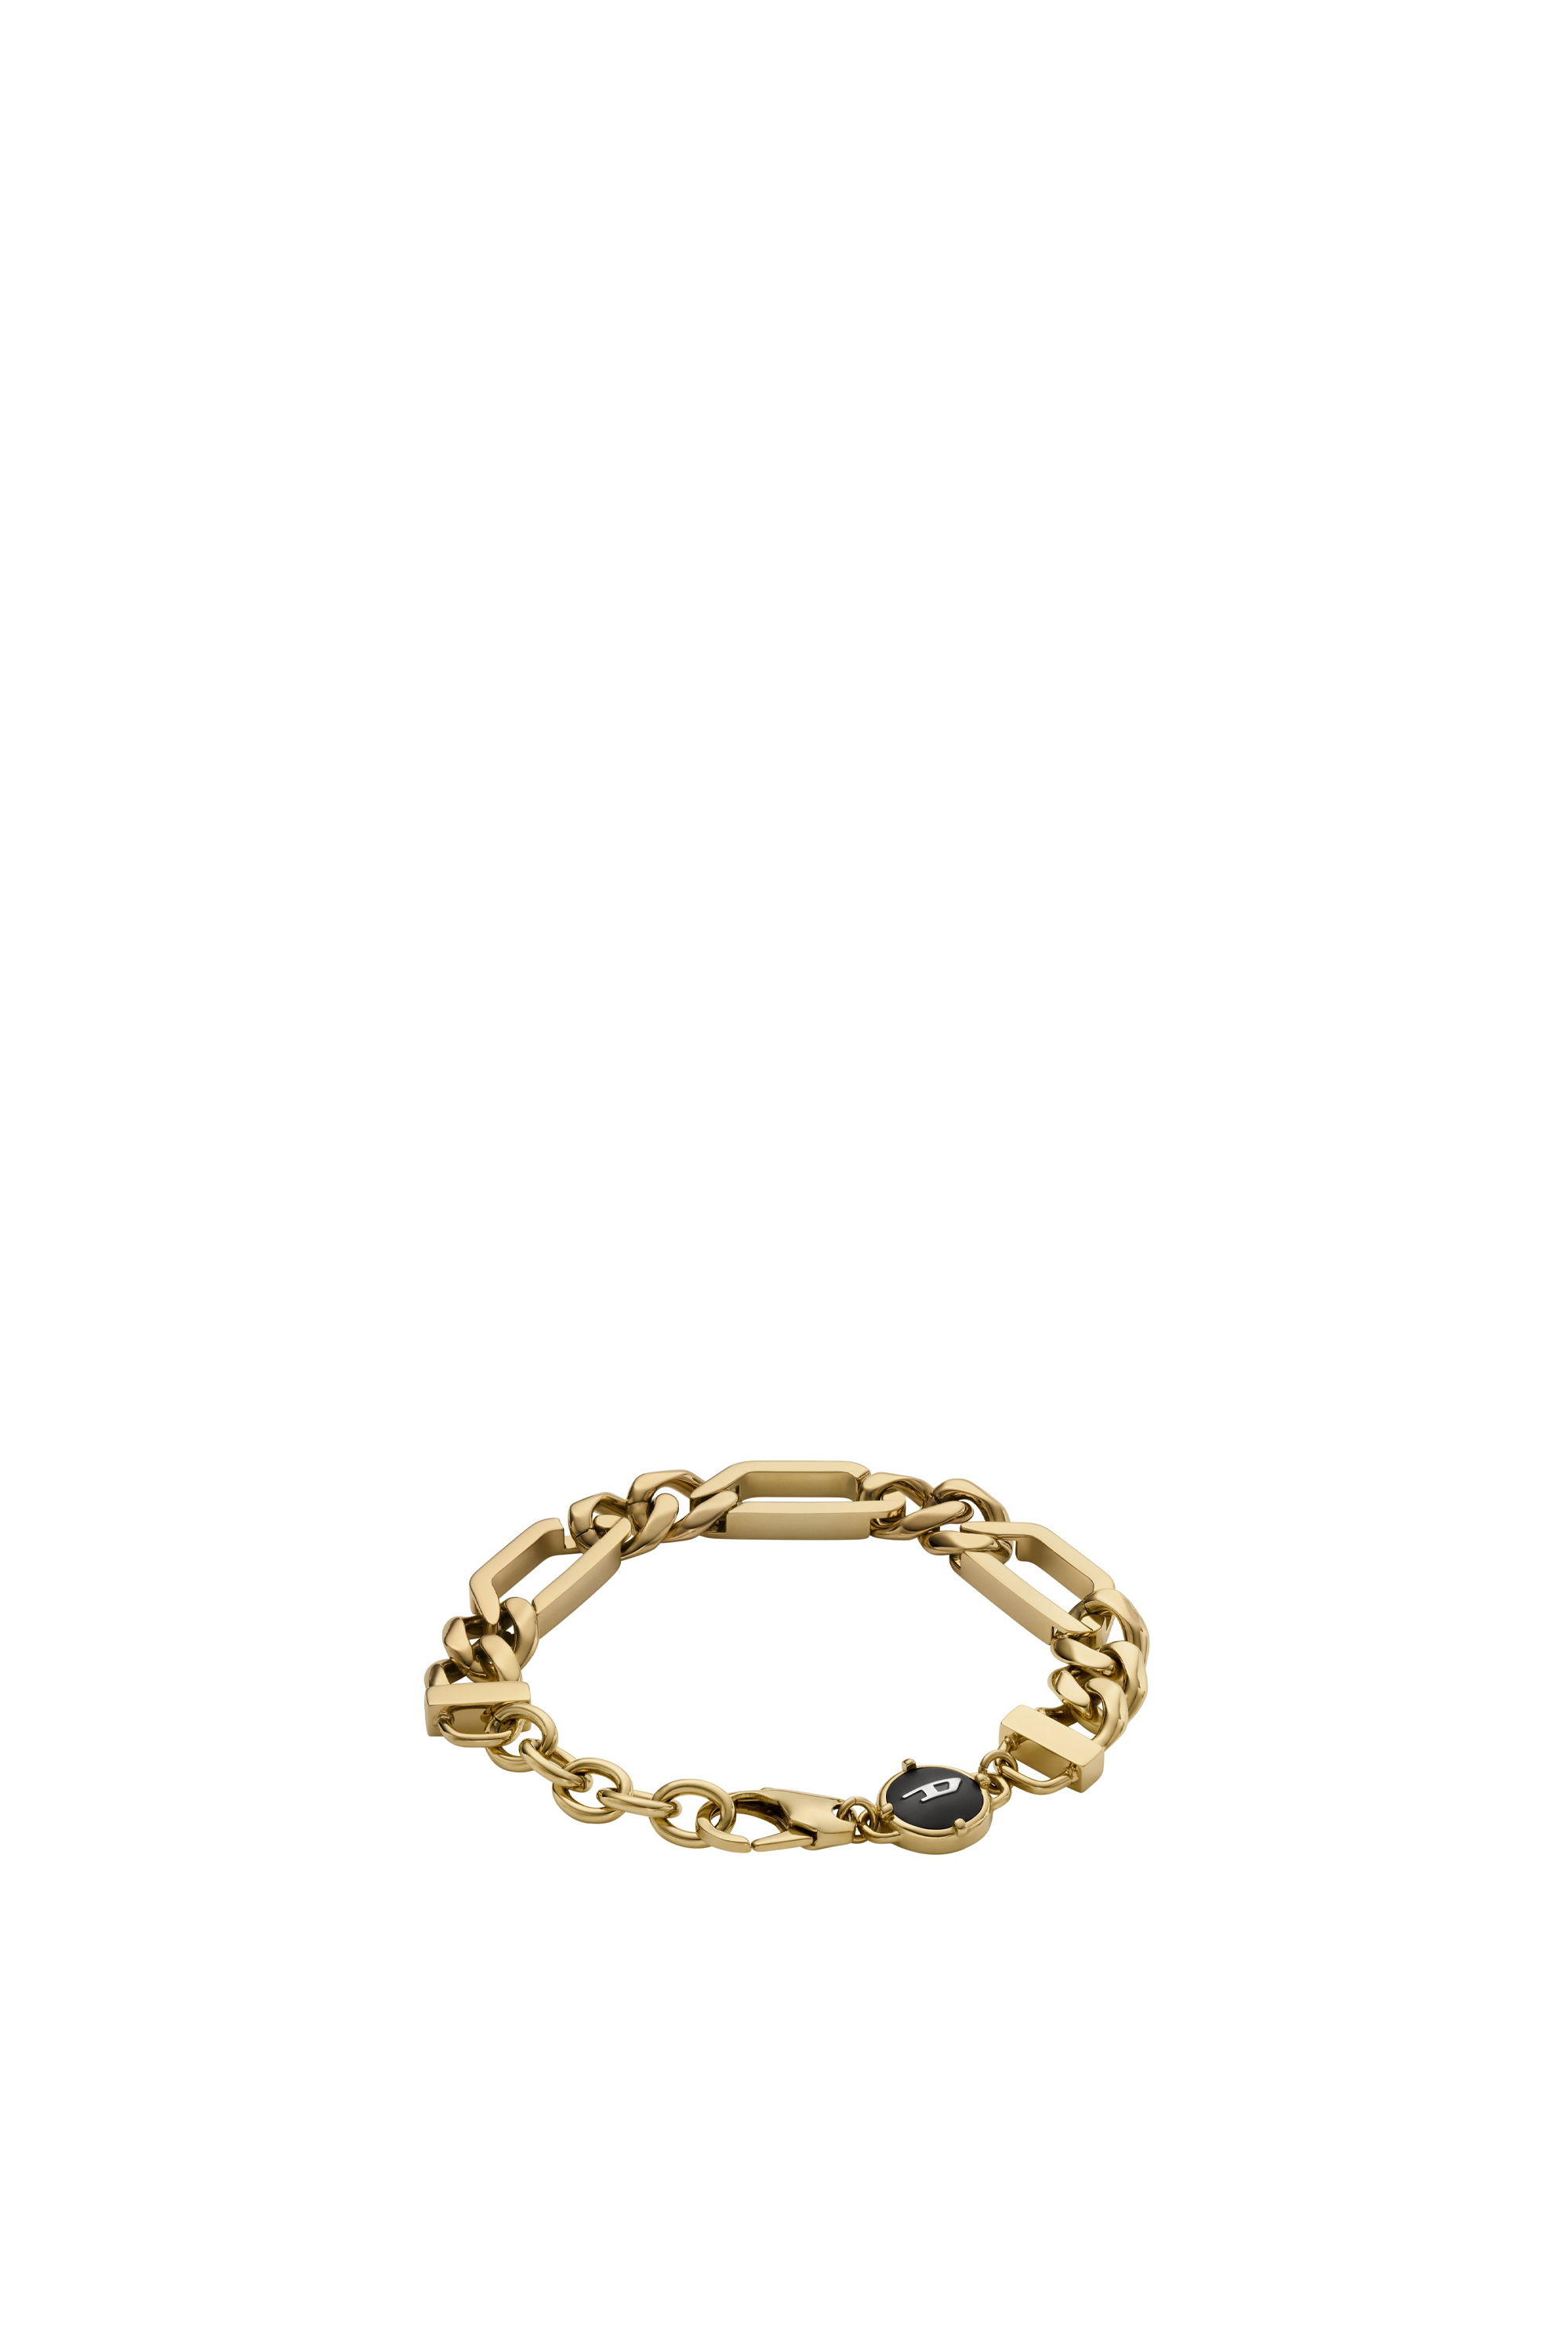 Diesel Gold-tone Stainless Steel Chain Bracelet